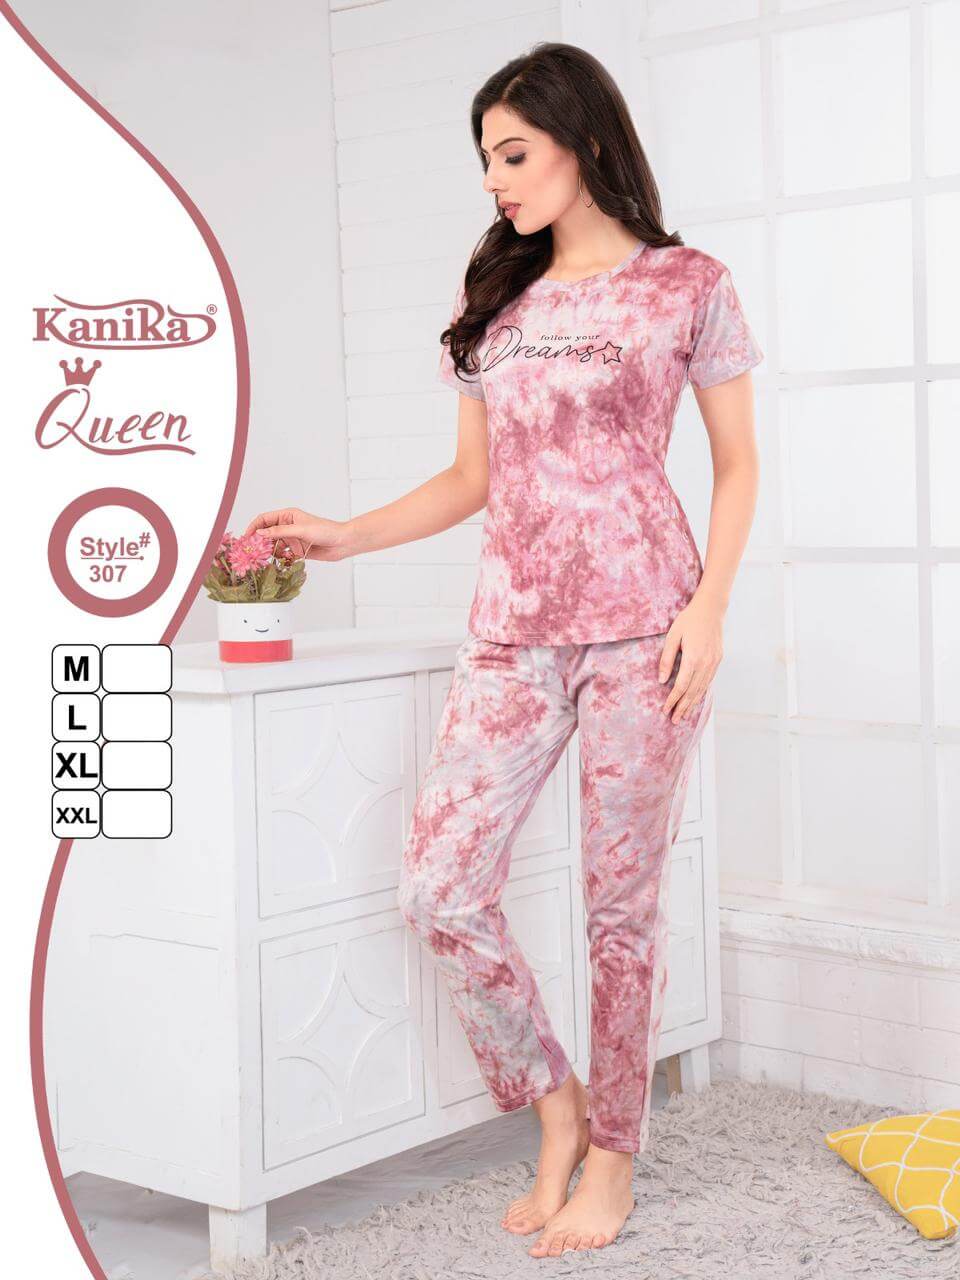 Kanika Queen Vol 2 Night Dress Catalog collection 7